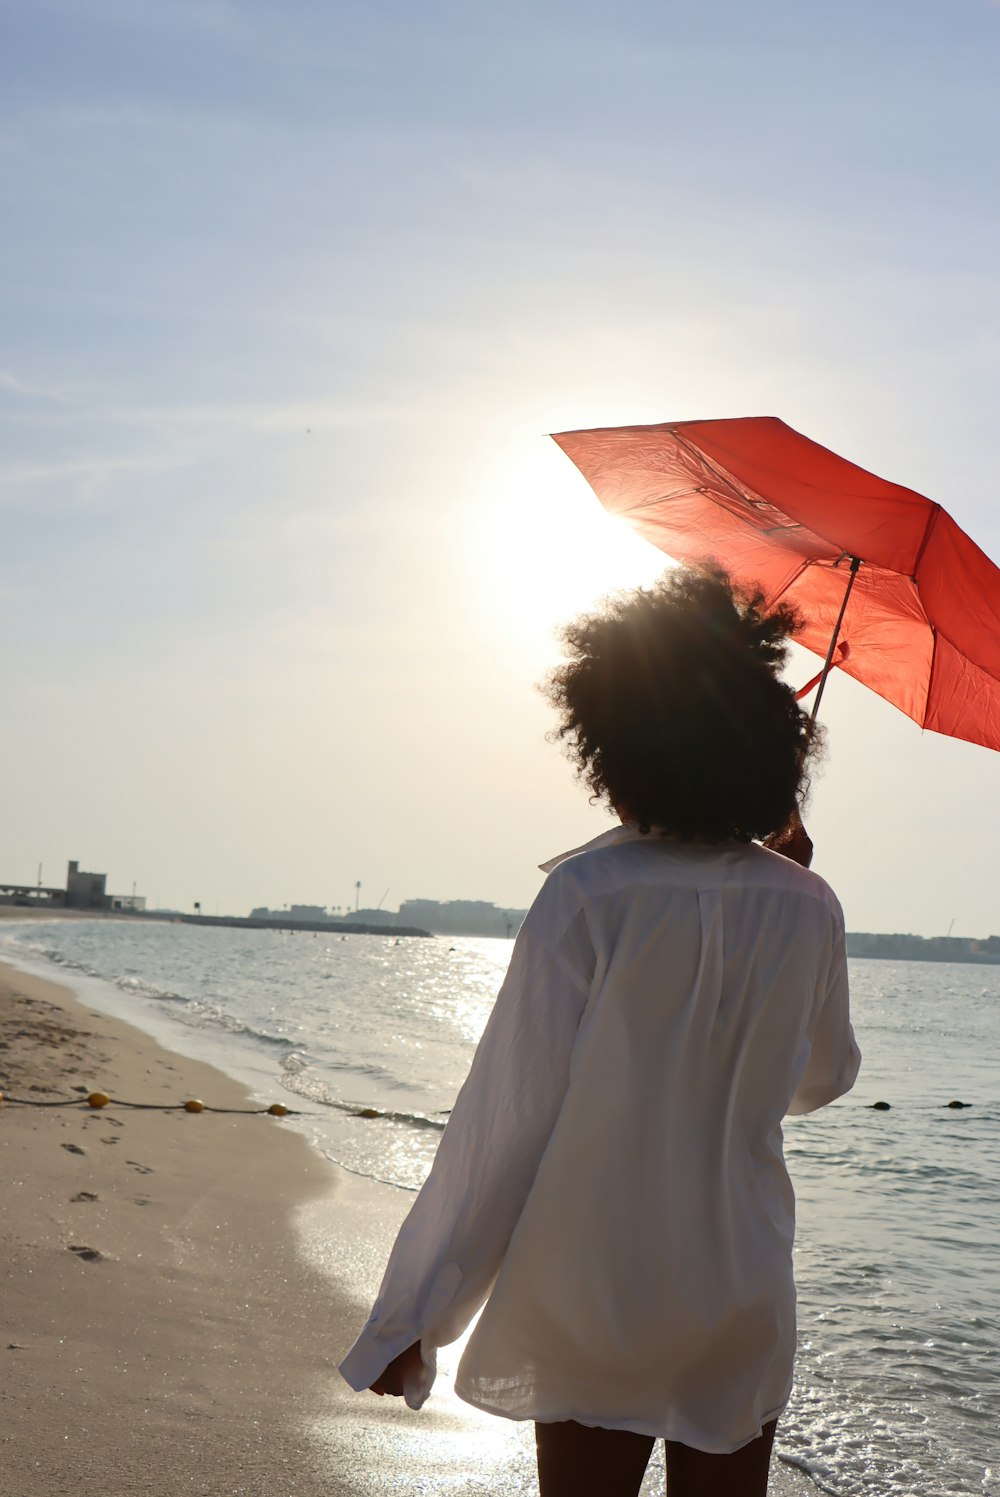 a woman walking on a beach holding an umbrella